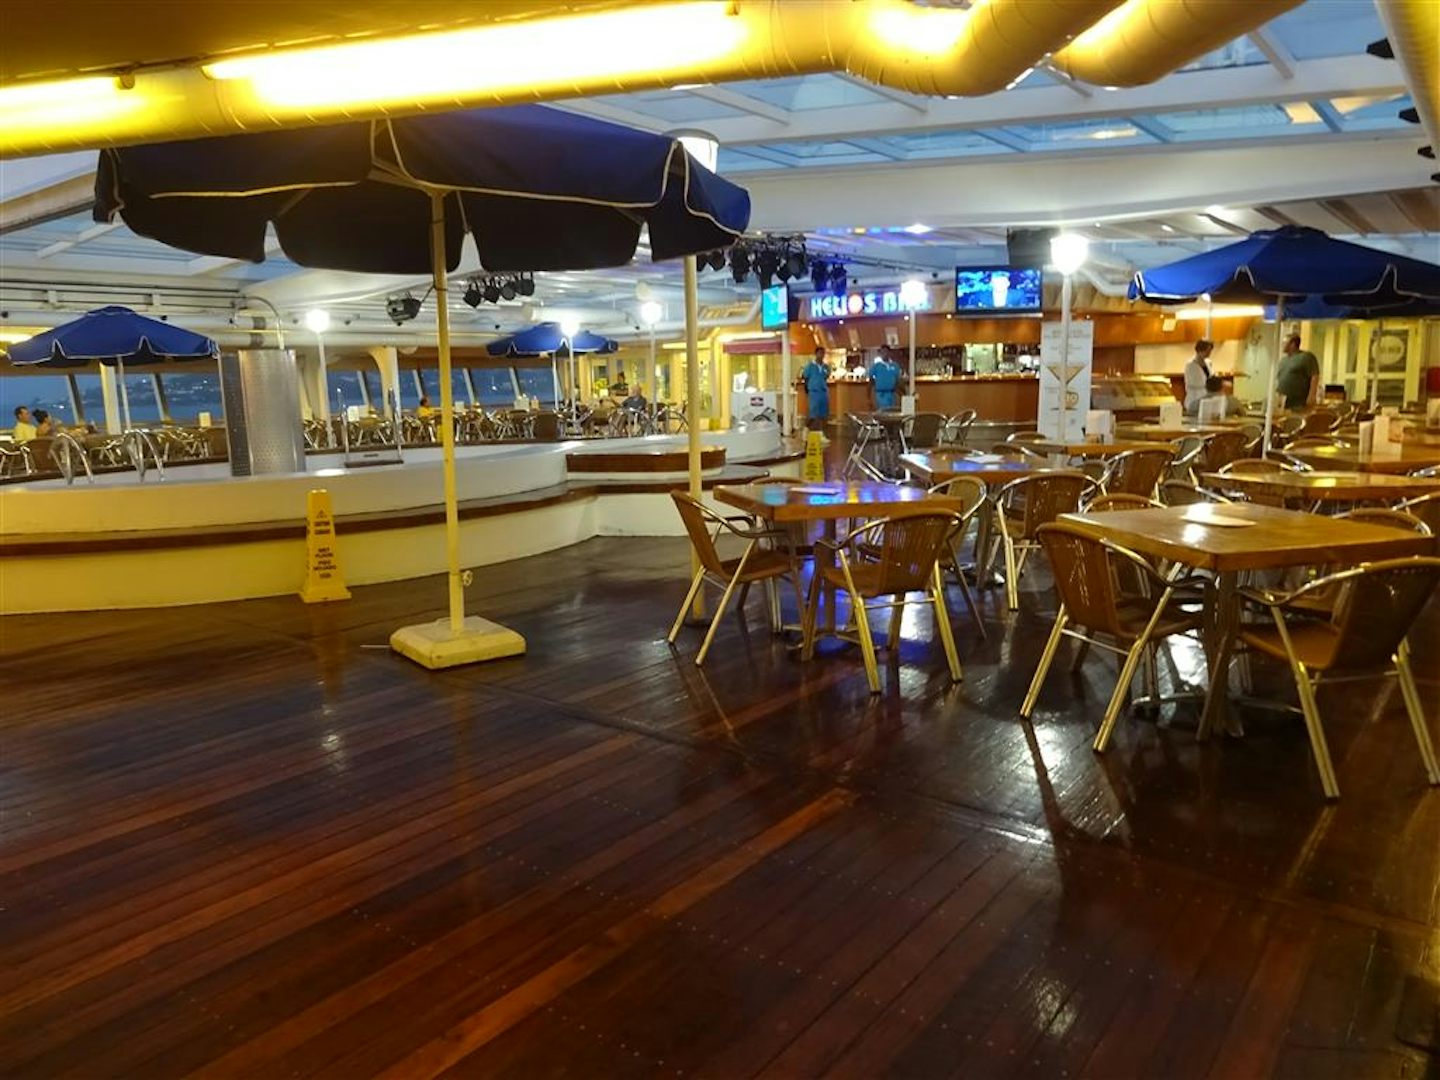 Pool area midships with Helios Bar.  Deck 9 Leda Buffet restaurant adjacent